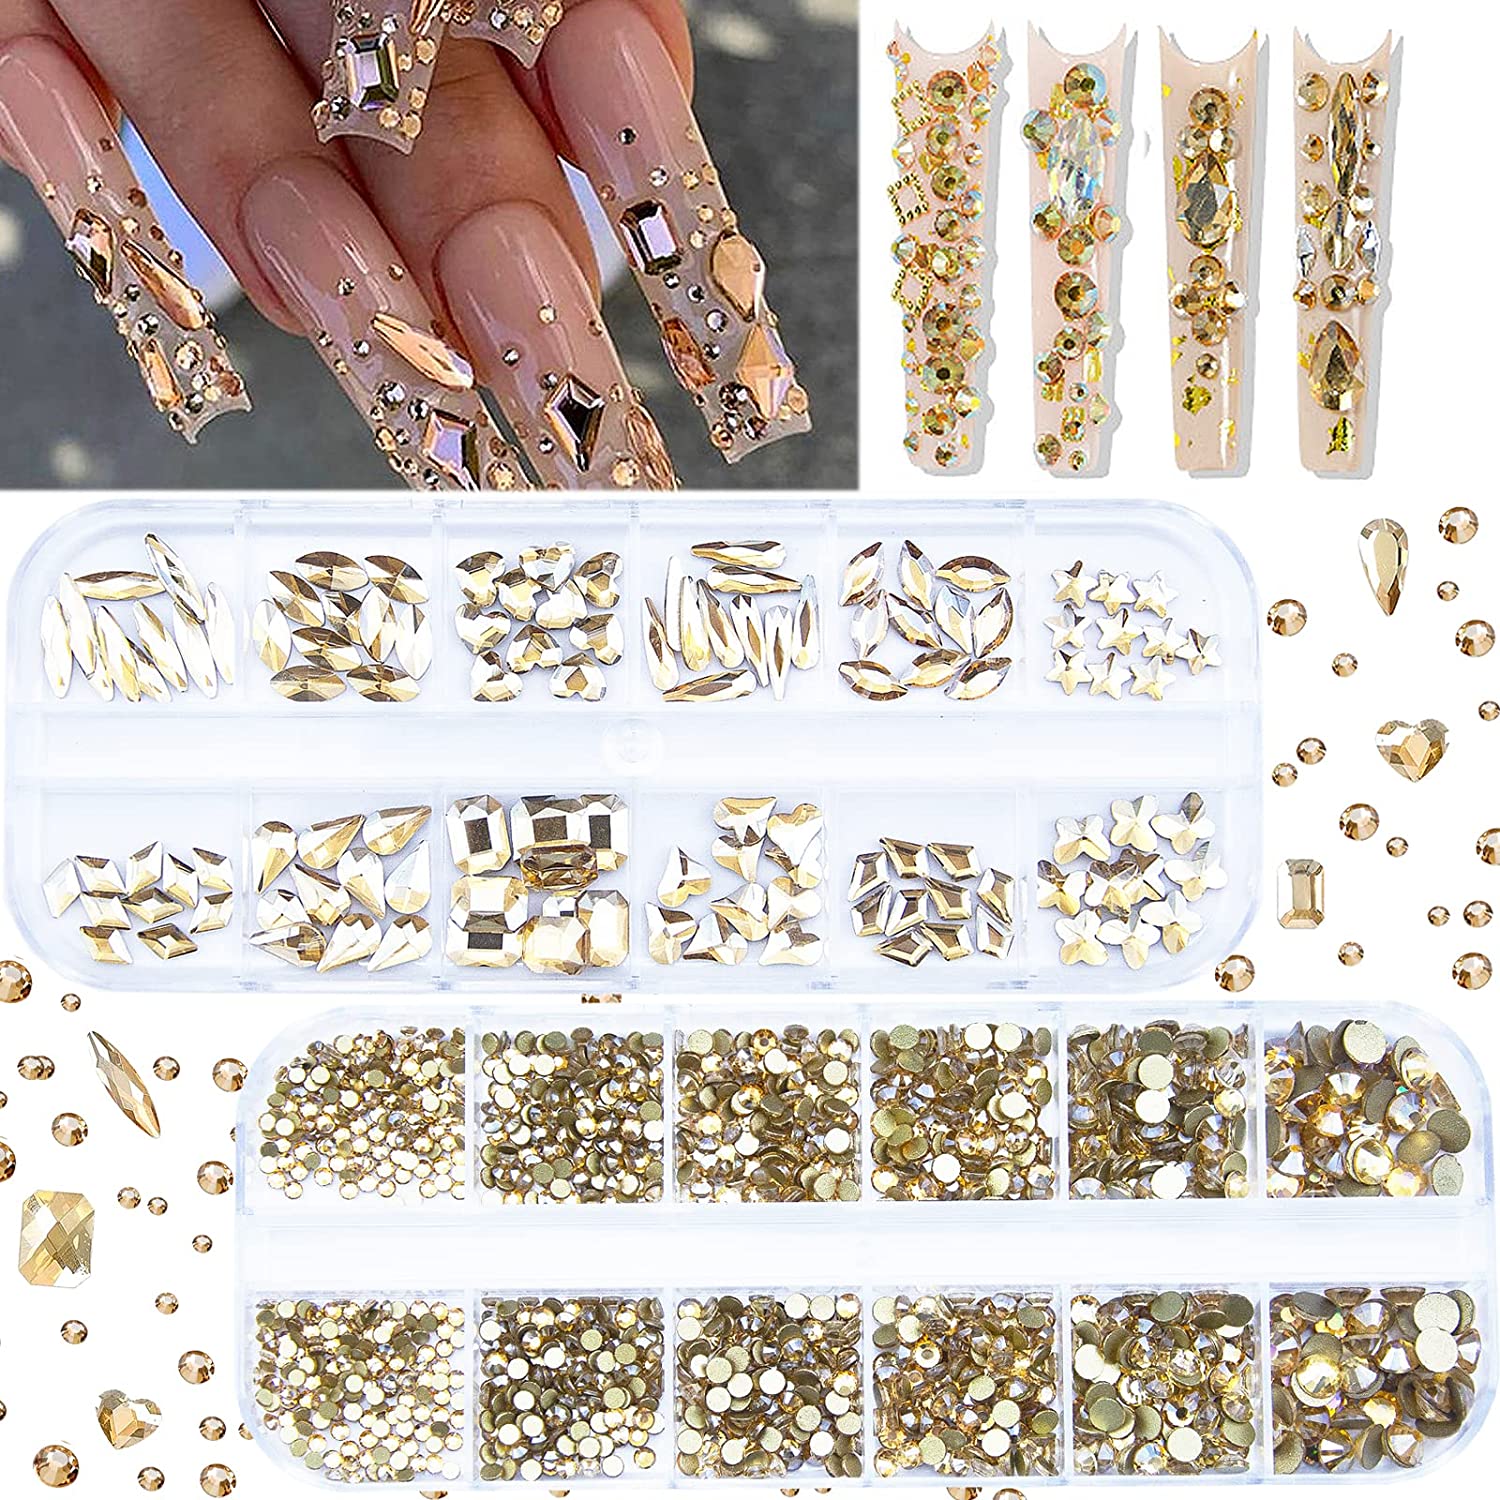 Nail Art Swarovski Round Flatback Rhinestone / Crystal AB  Nails design  with rhinestones, Rhinestone nails, Bling nails